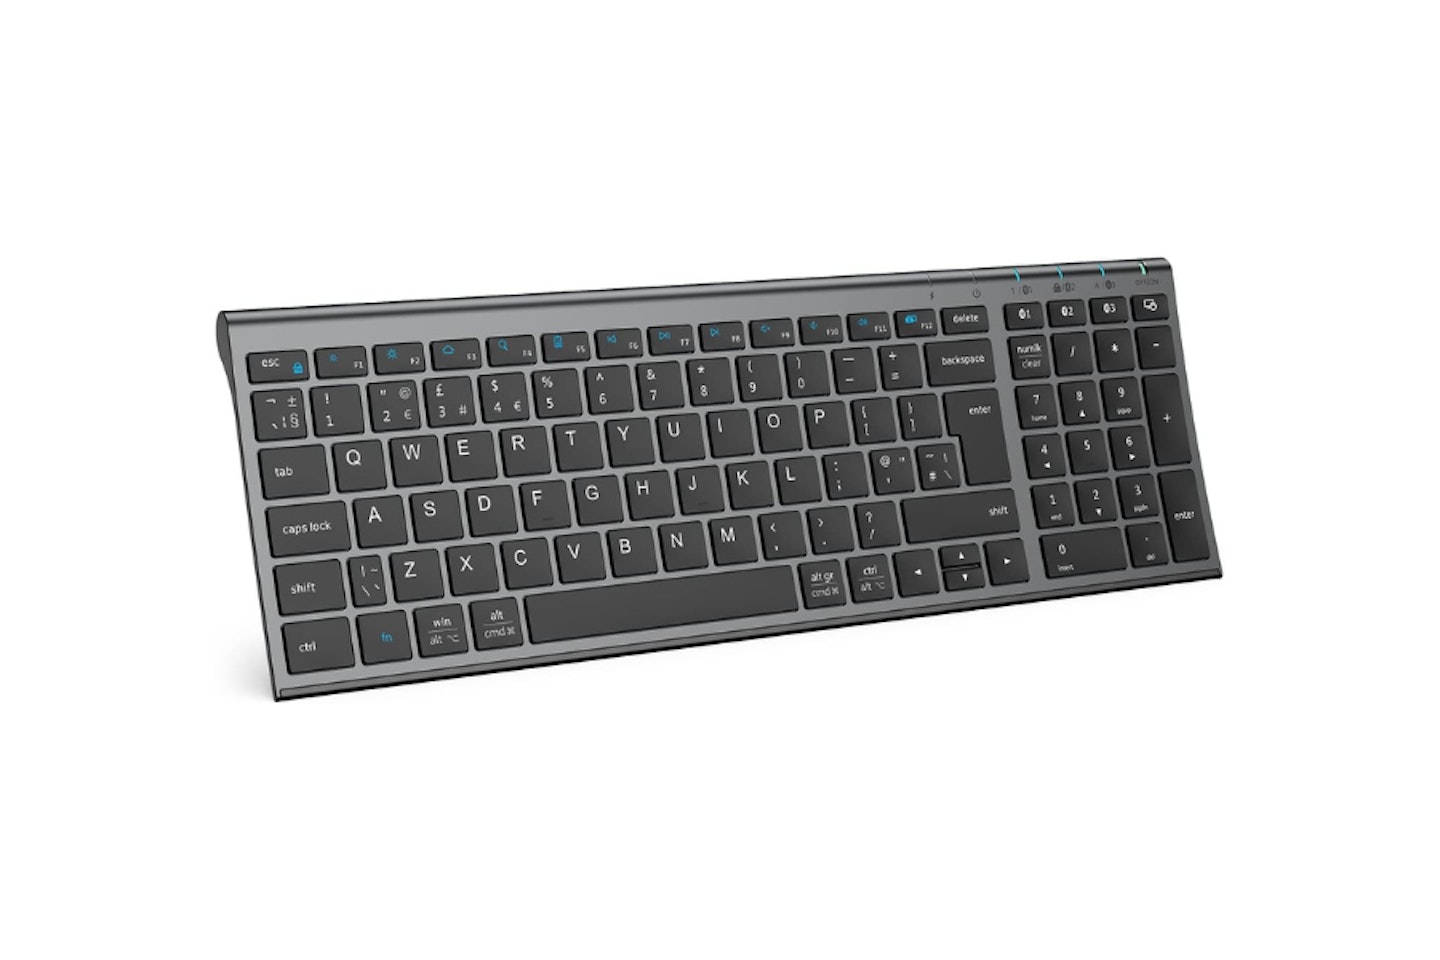 iClever Wireless Keyboard